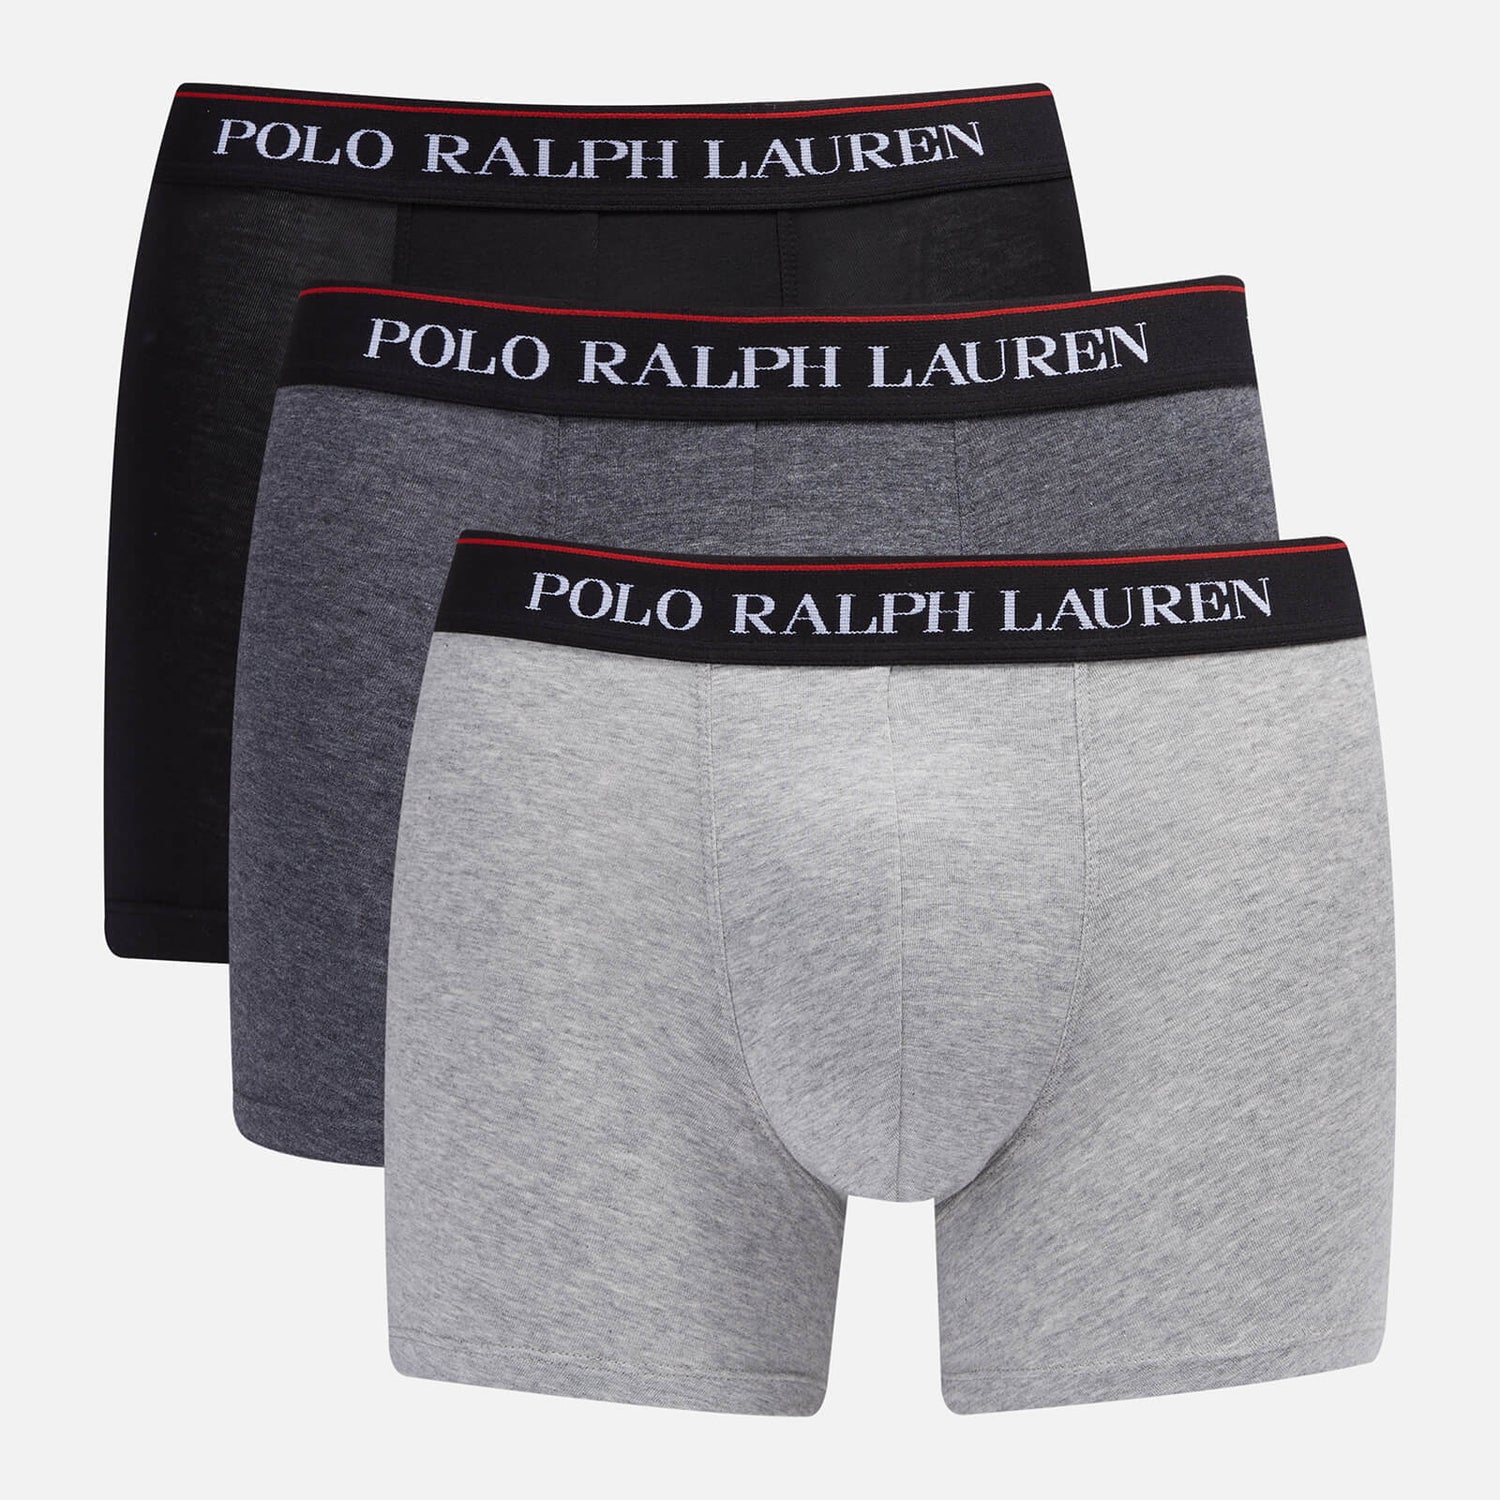 Polo Ralph Lauren Men's 3-Pack Boxer Briefs - Black/Charcoal Heather/Andover Heather